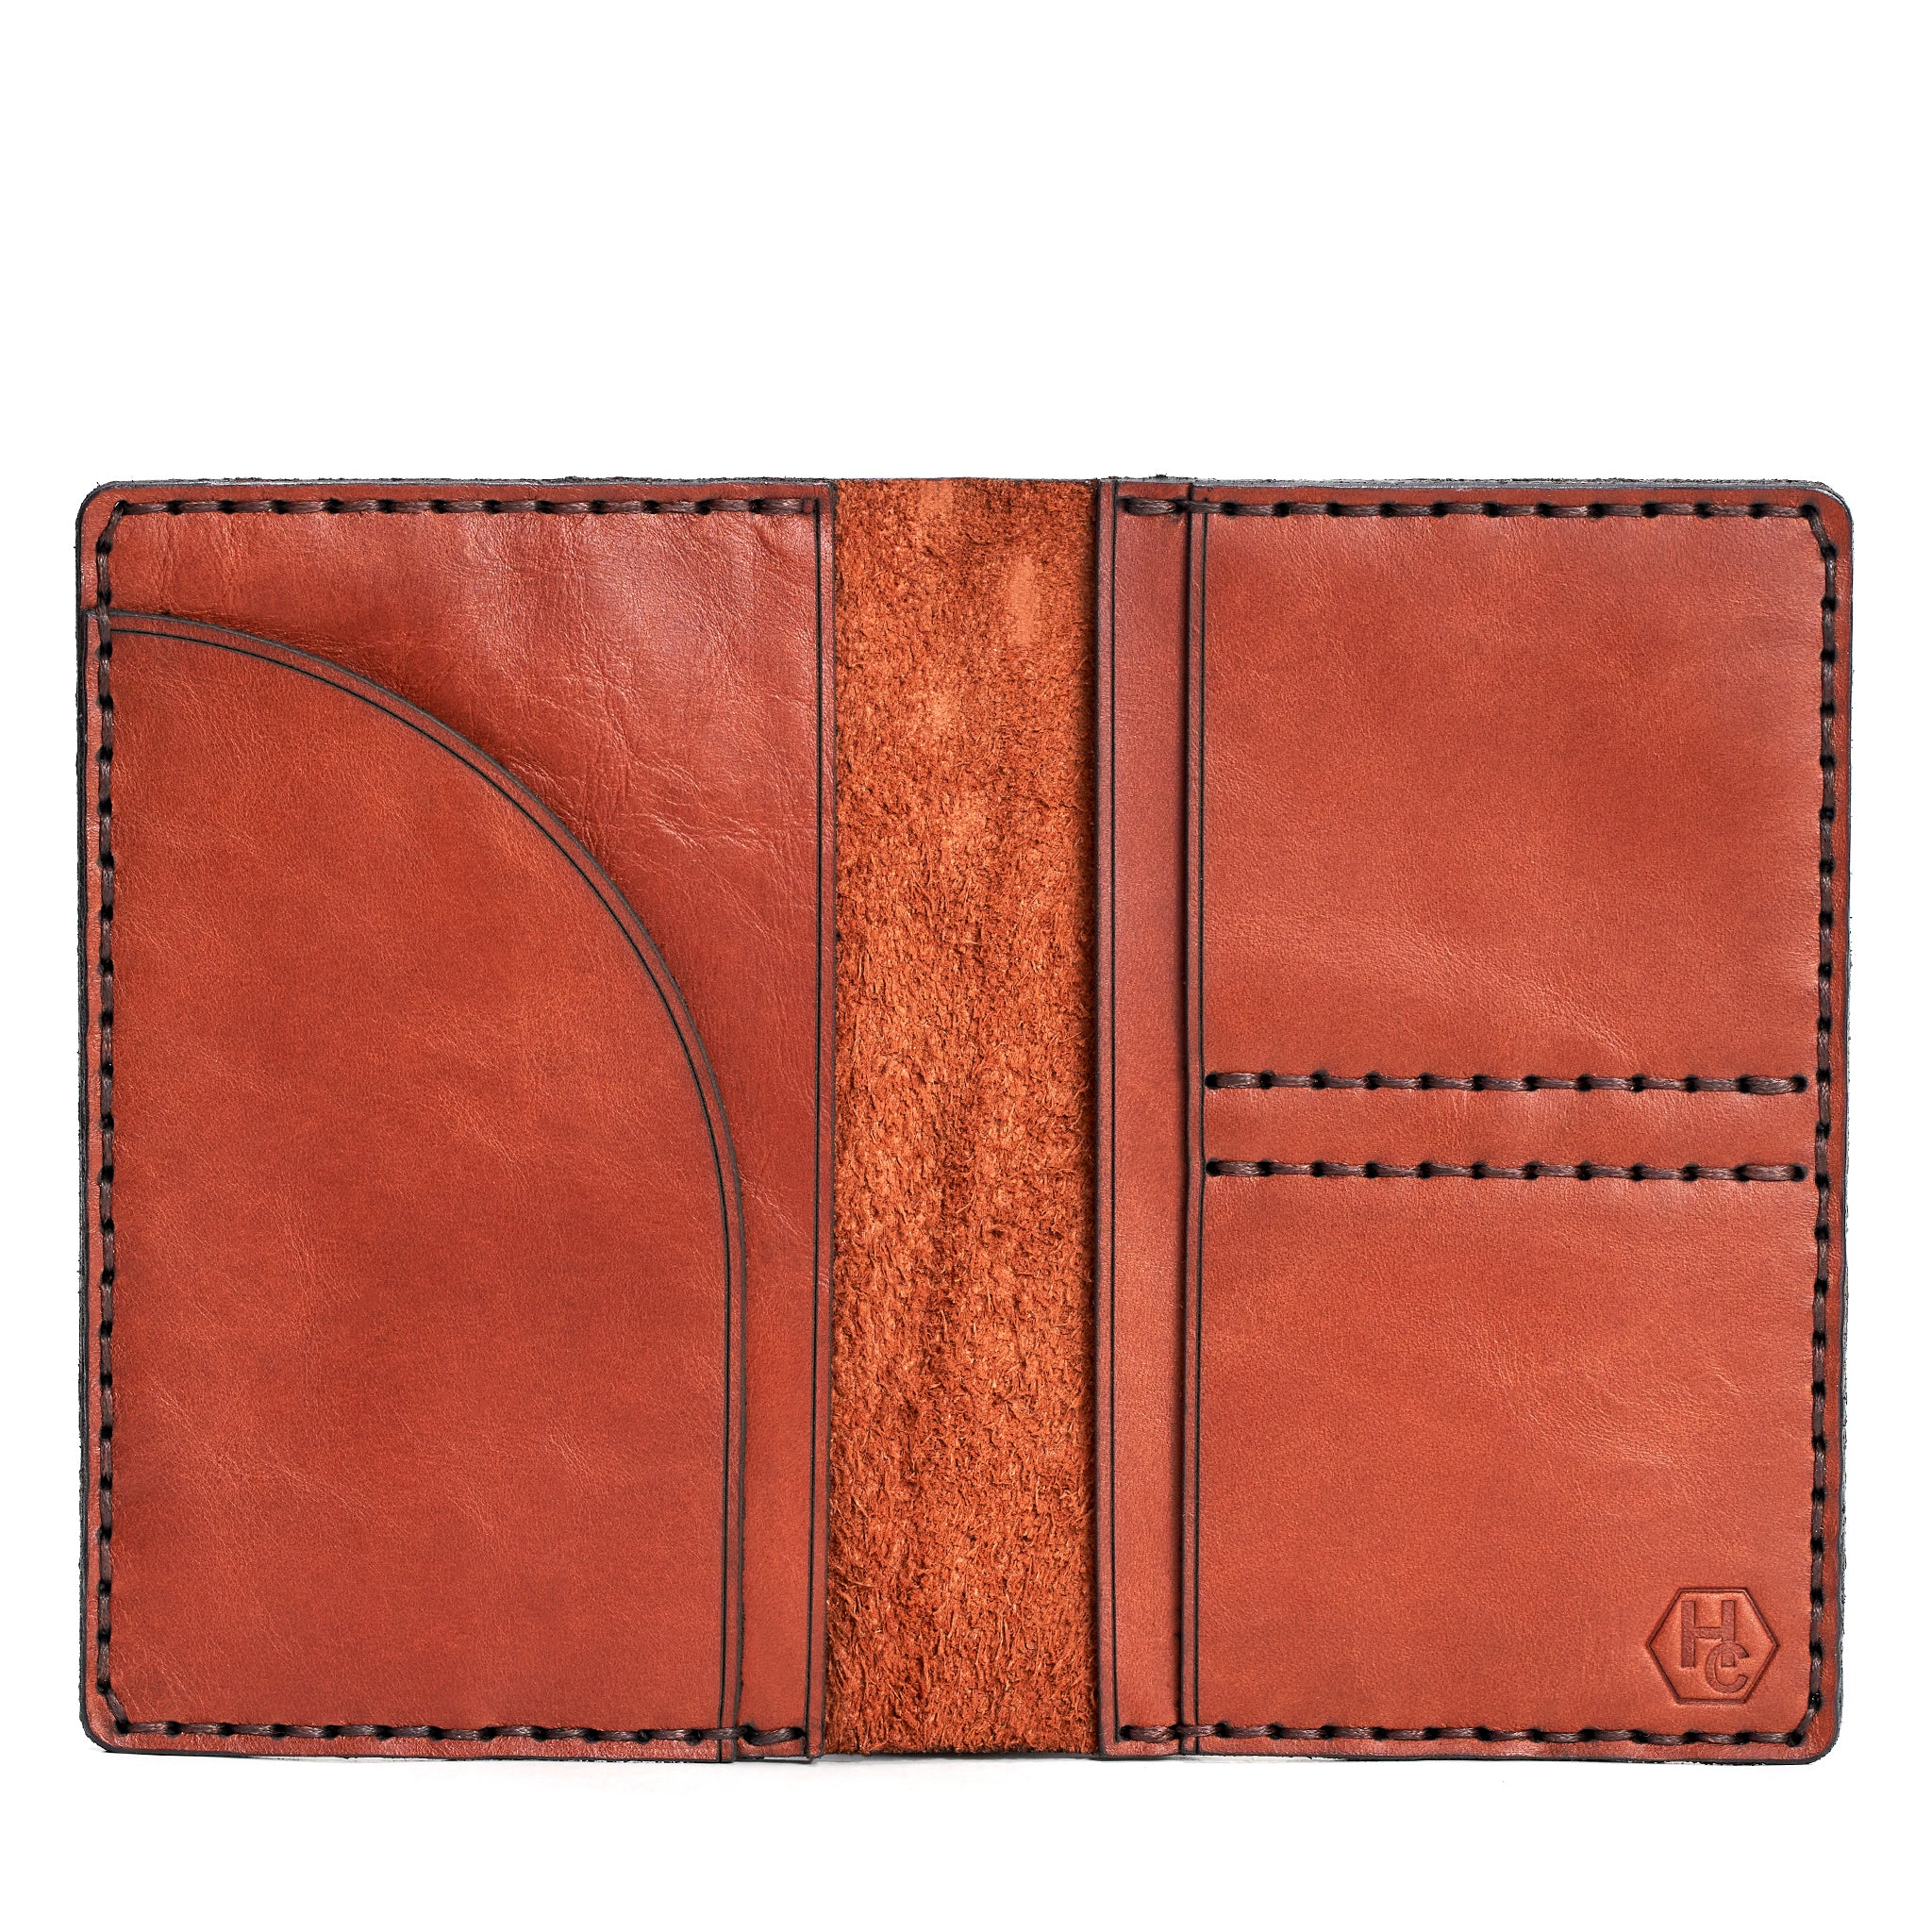 Handmade Leather Passport Case Red Brick 31707643248791